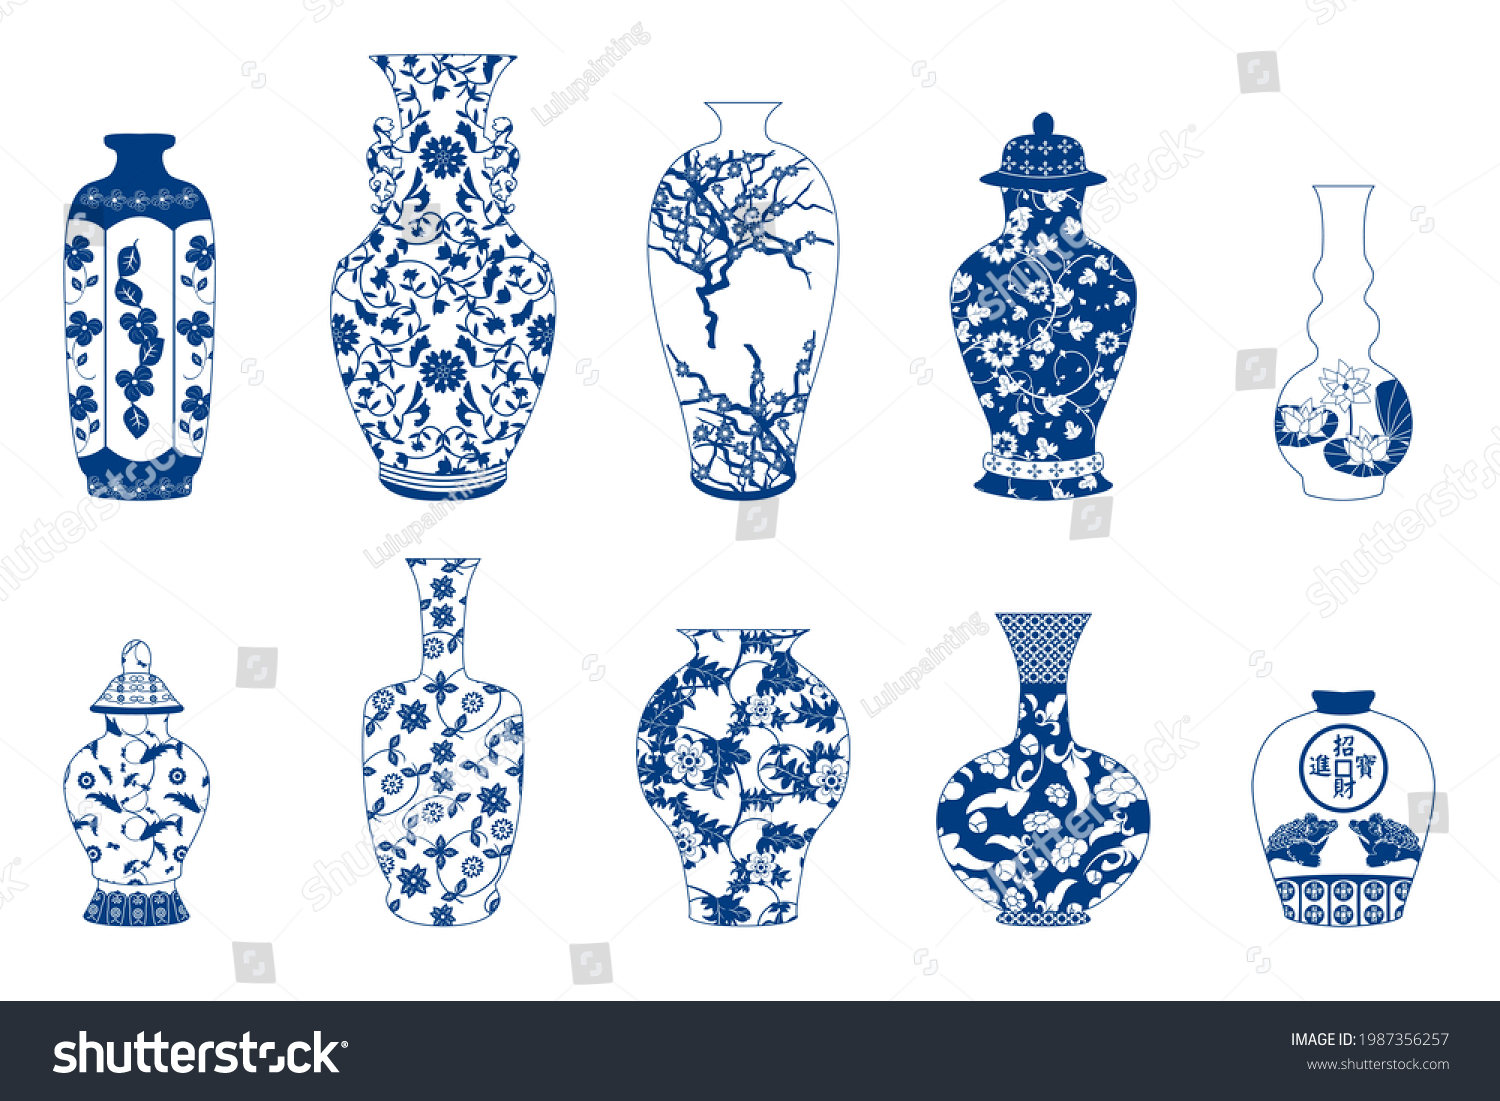 Chinese Porcelain Vase. Flower Bowl. Blue and White Porcelain Clip Art. Chinese porcelain vase set, ceramic vase, antique blue and white pottery vase with landscape painting.  #1987356257